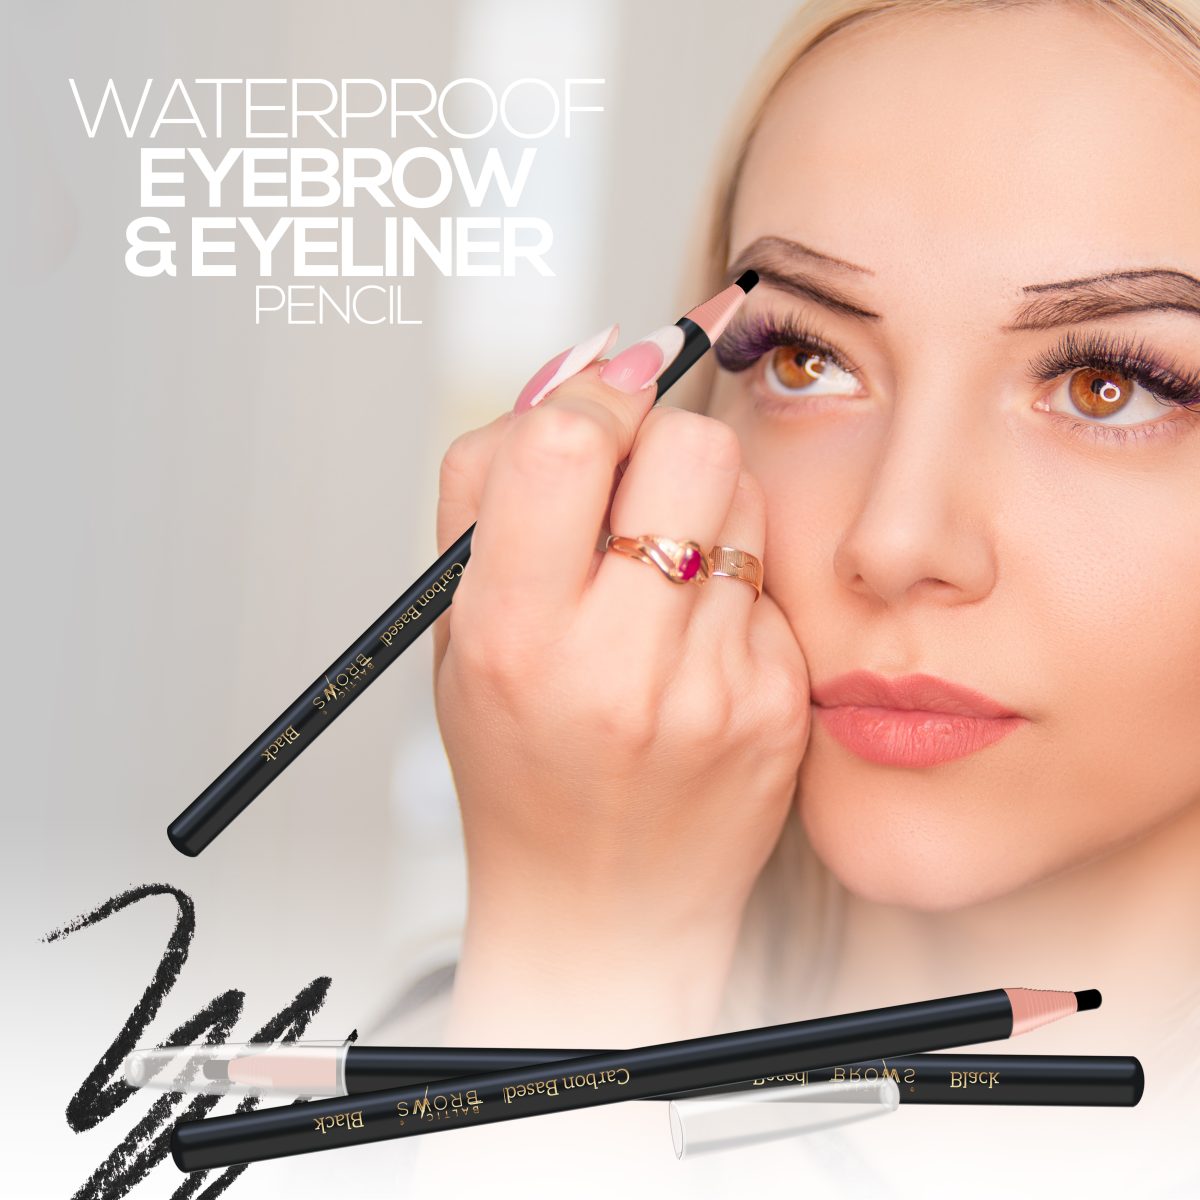 Waterproof eyebrow and eyeliner pencil